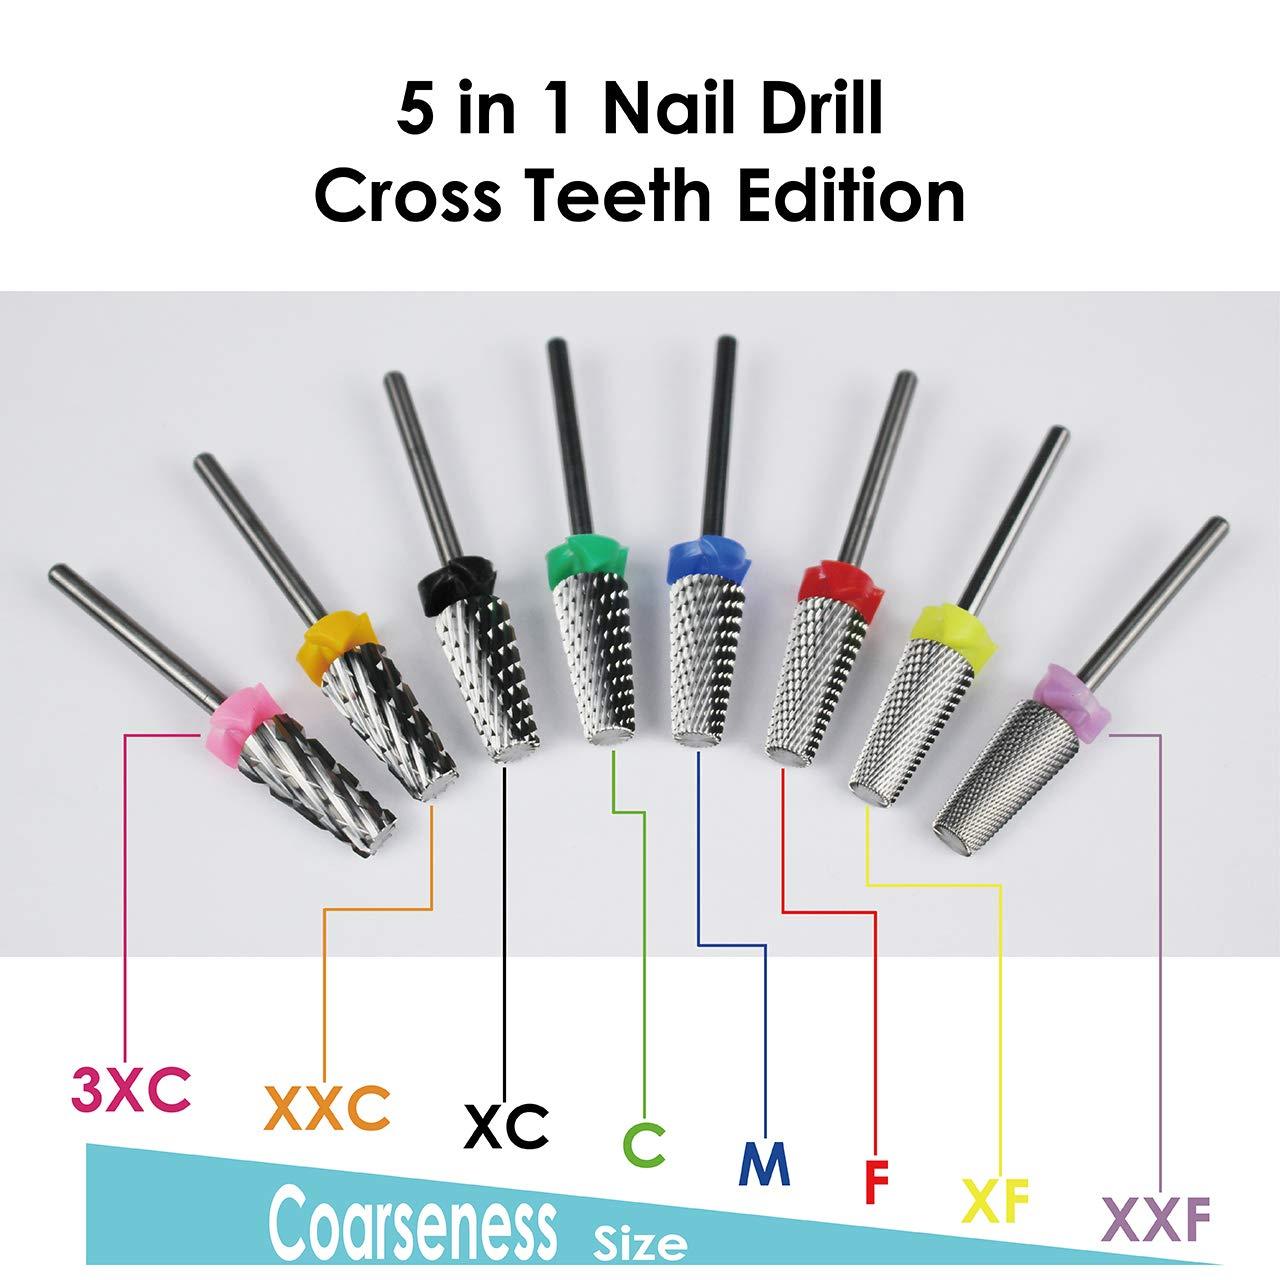 : C & I 5 in 1 Nail Drill Bit, Cross & Slim Edition